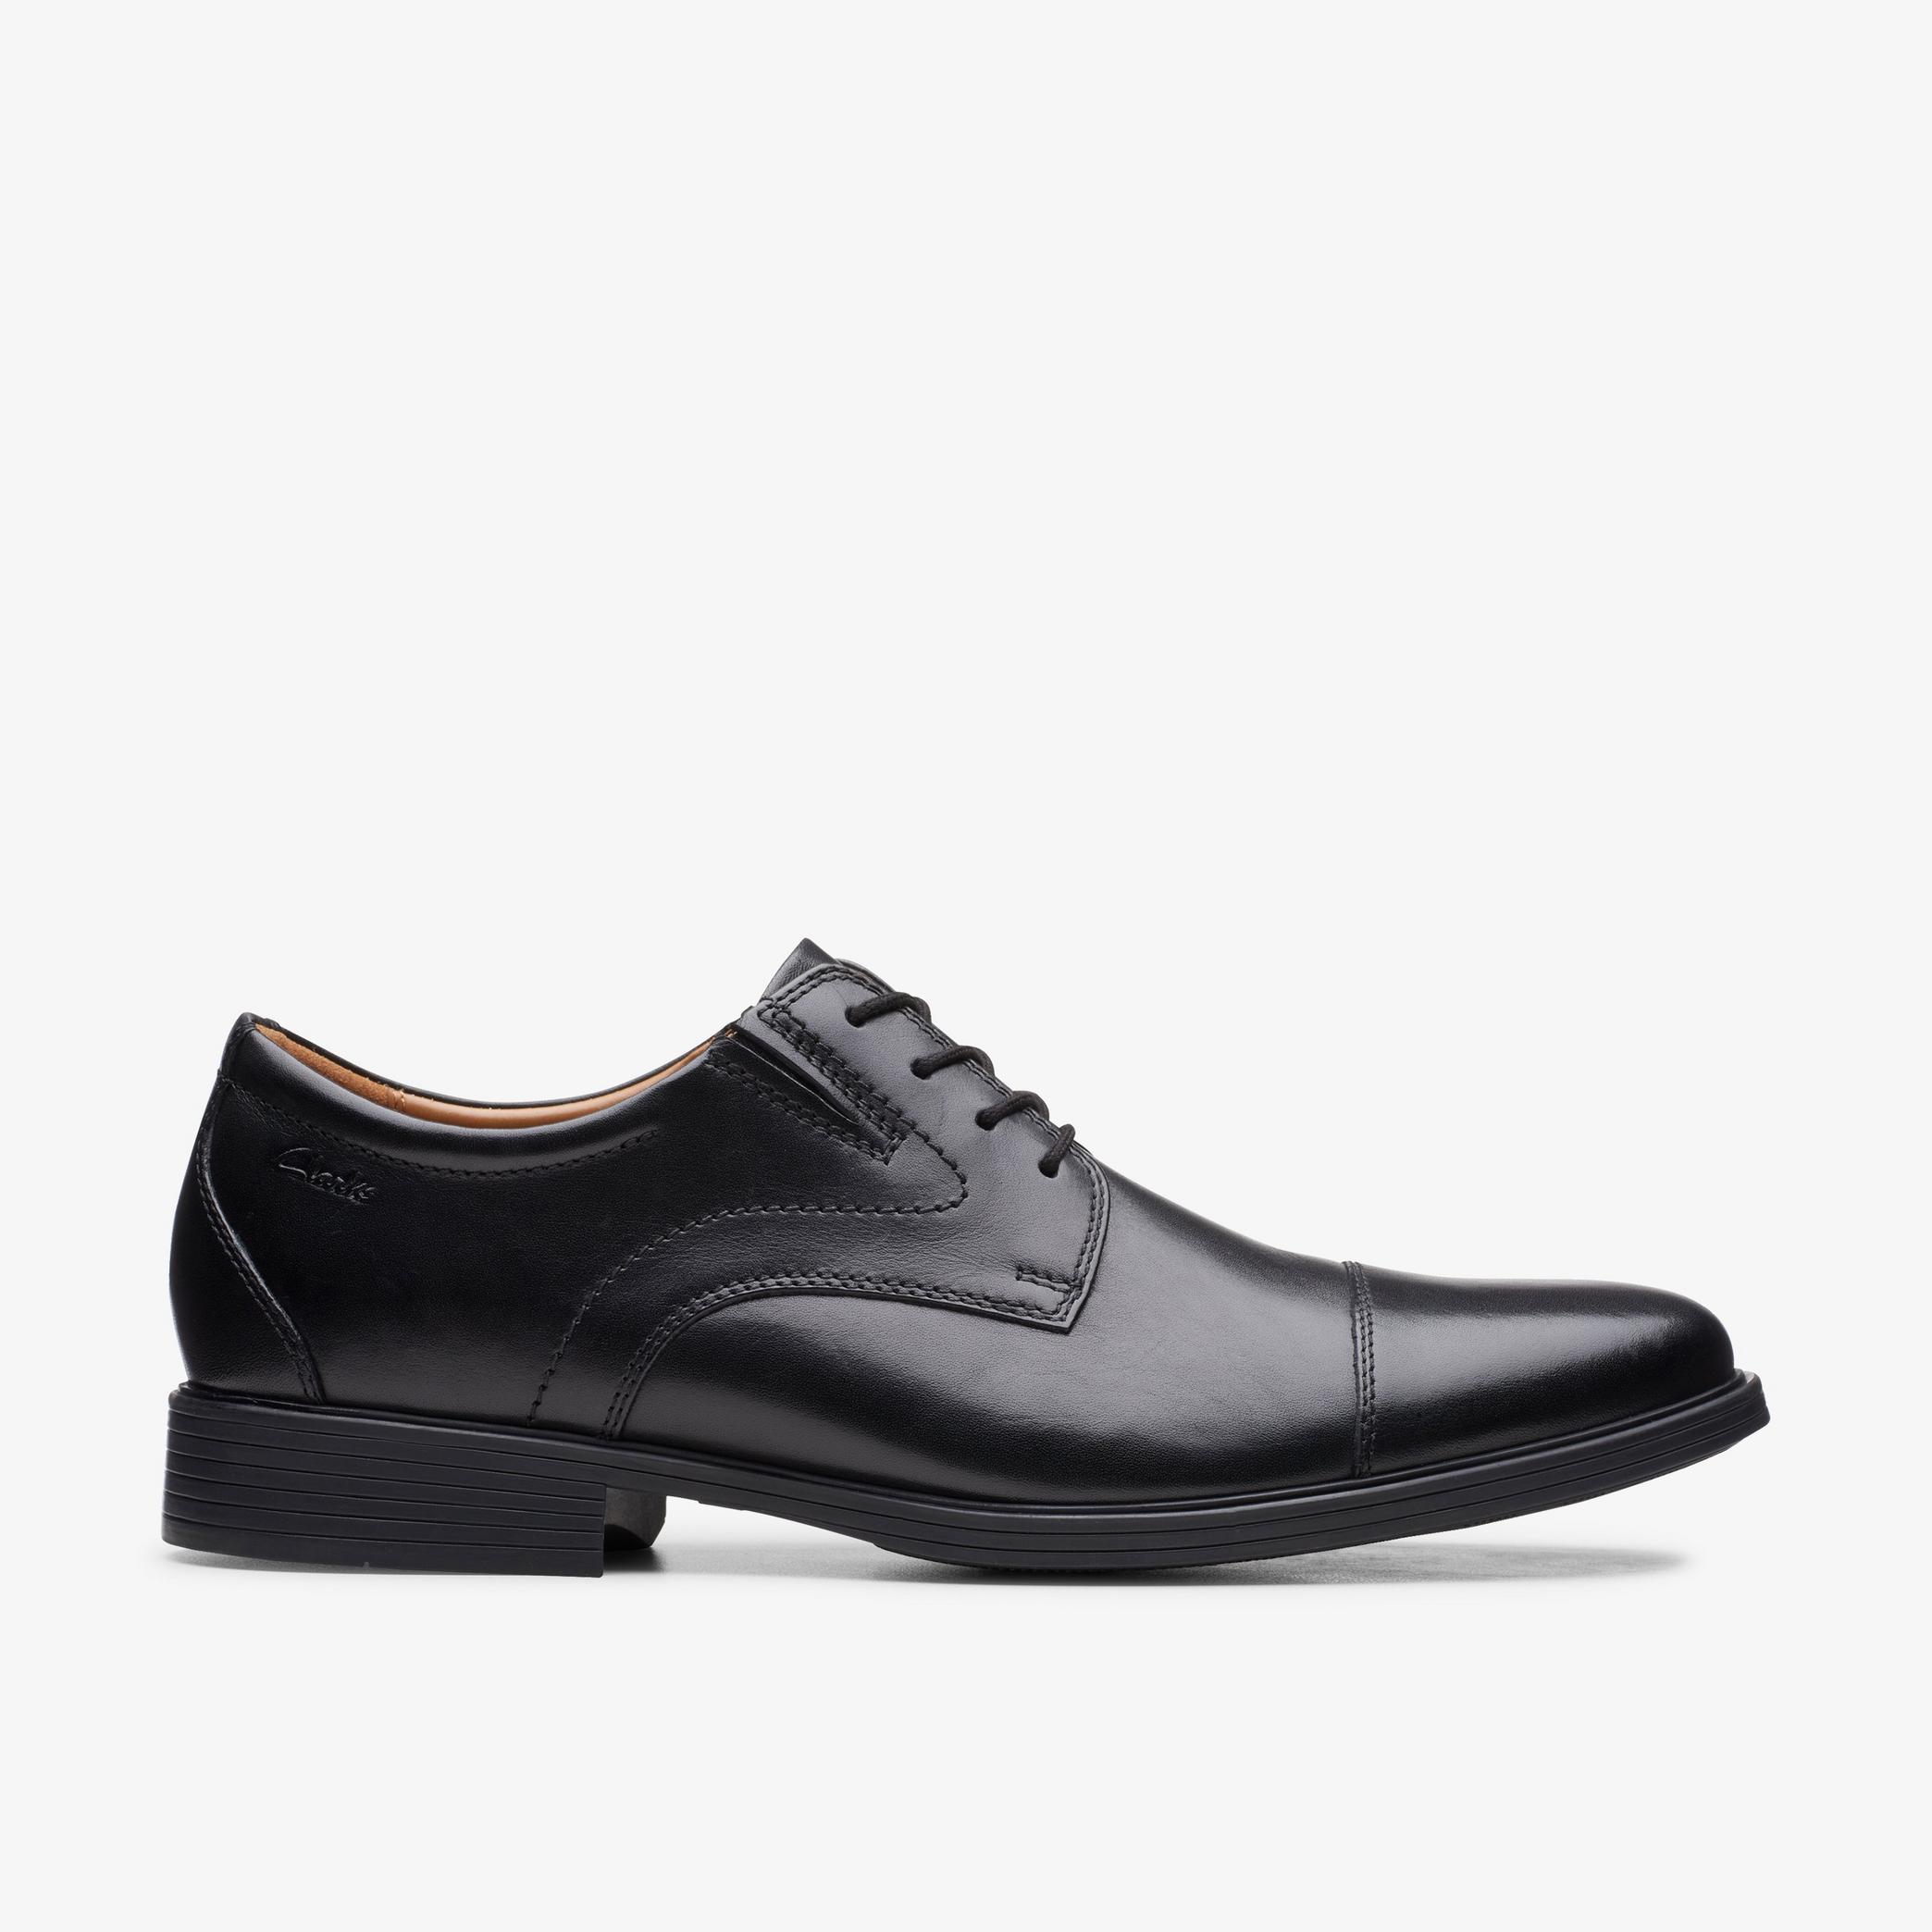 Chaussures Oxford en cuir noir Whiddon Cap, vue 1 de 6